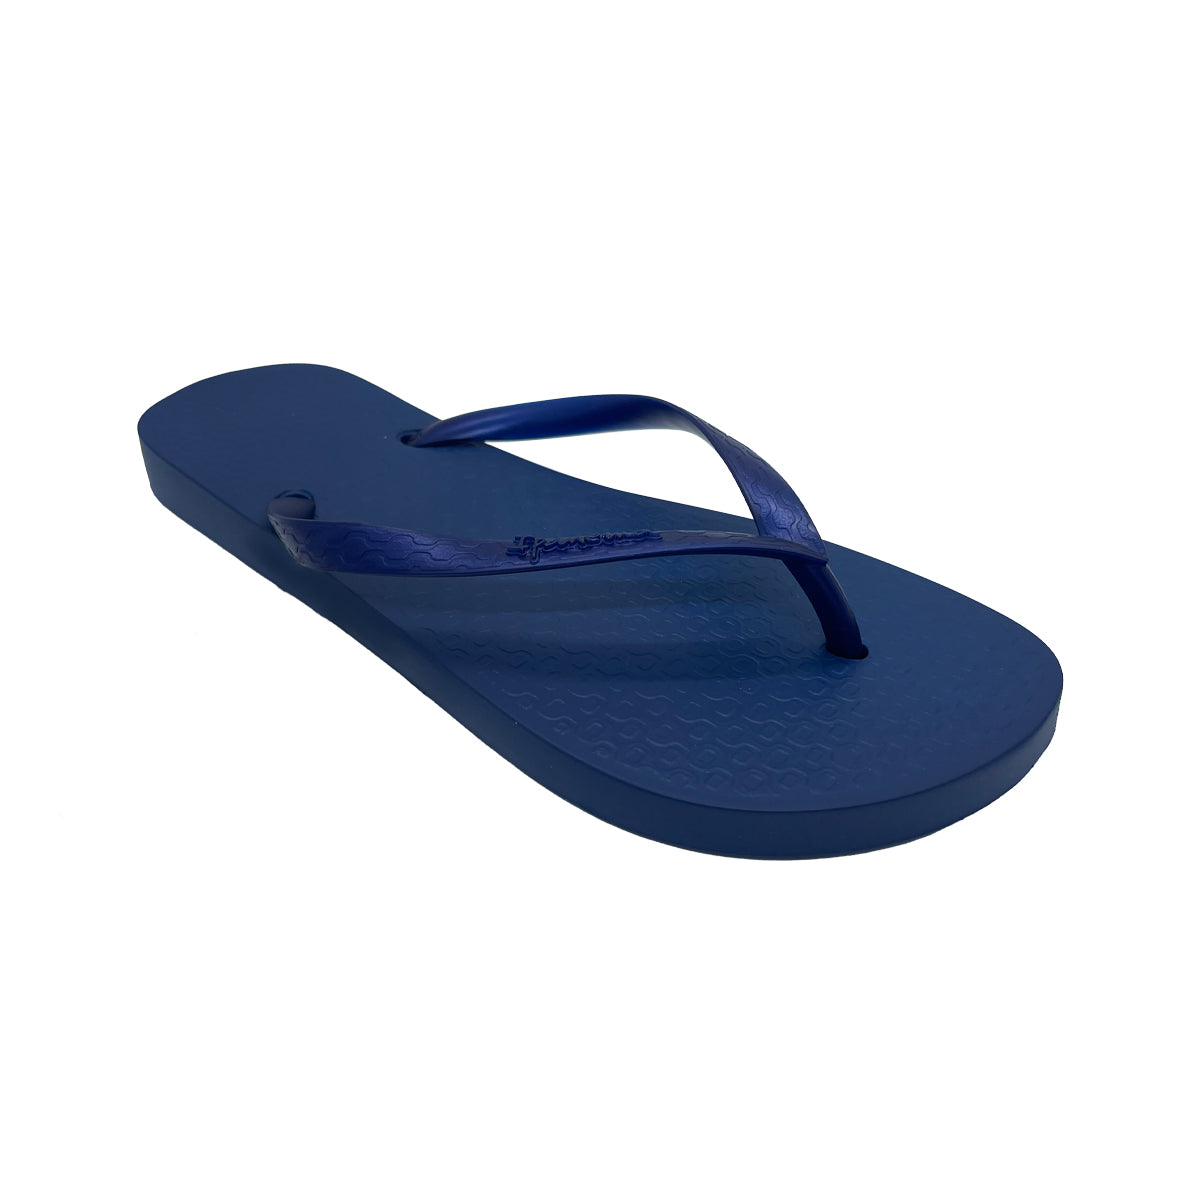 Ipanema Flip-Flops For Women, Navy Blue